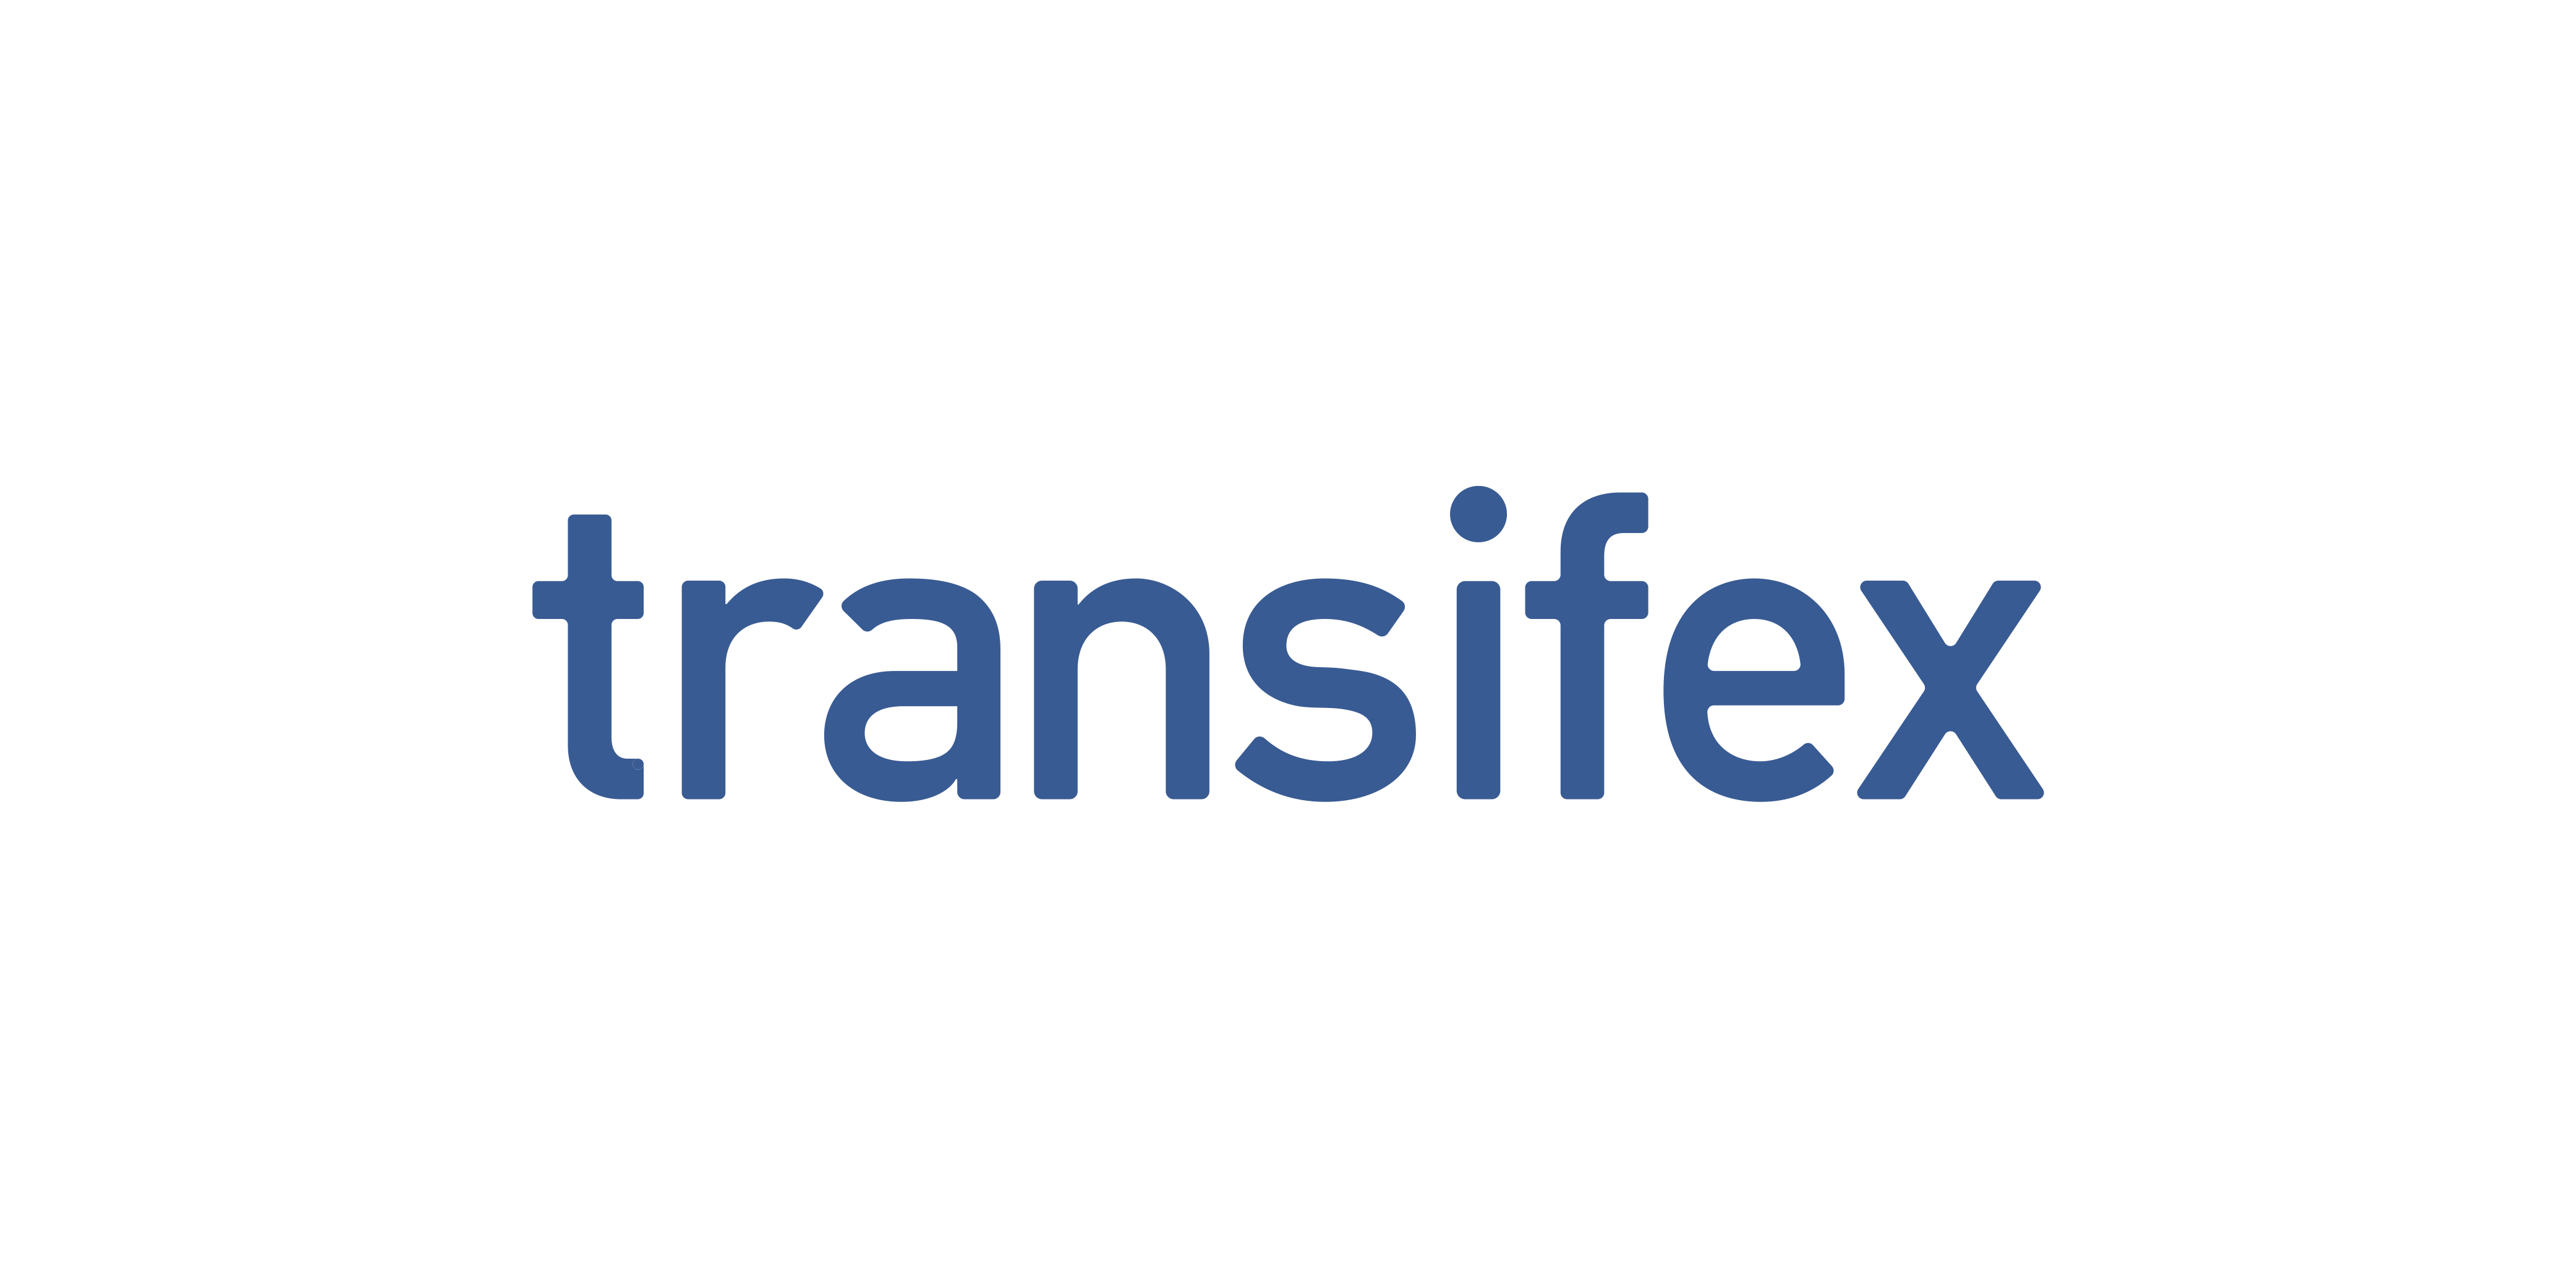 Transifex Translation Management System